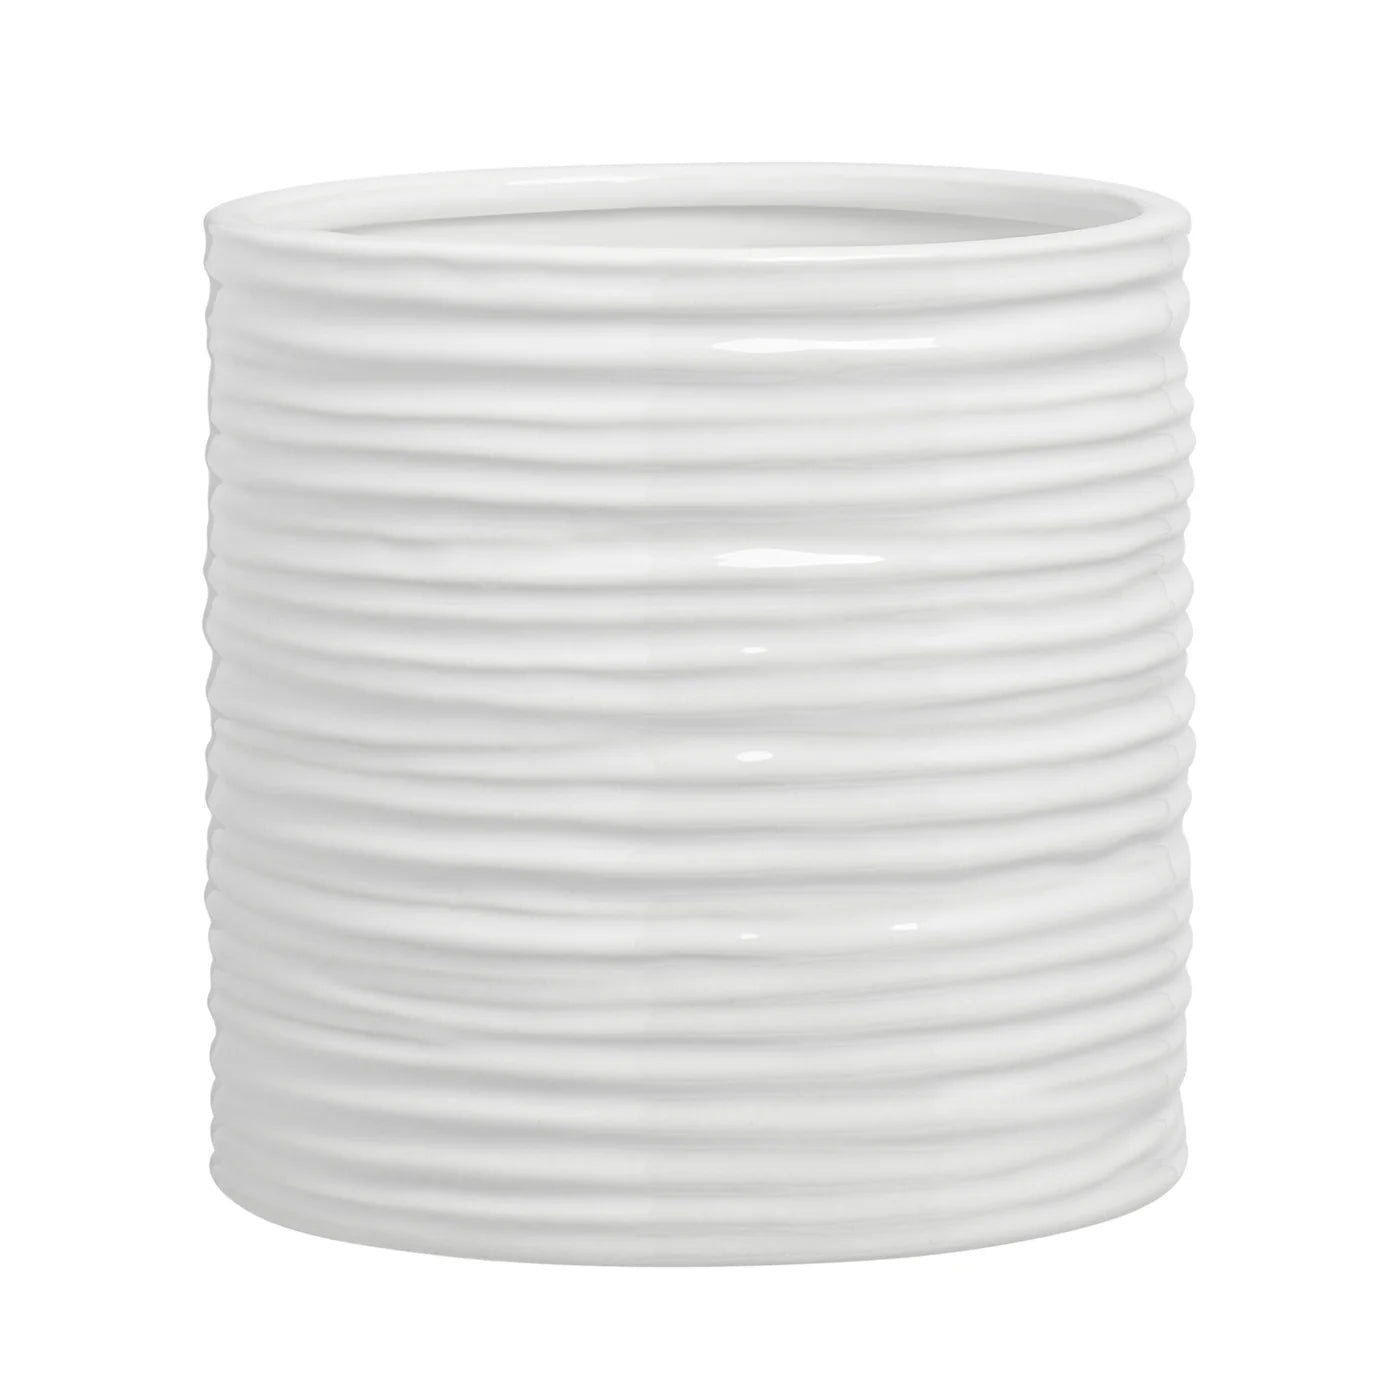 Vase - Cylinder Ripple White Ceramic - 6"h